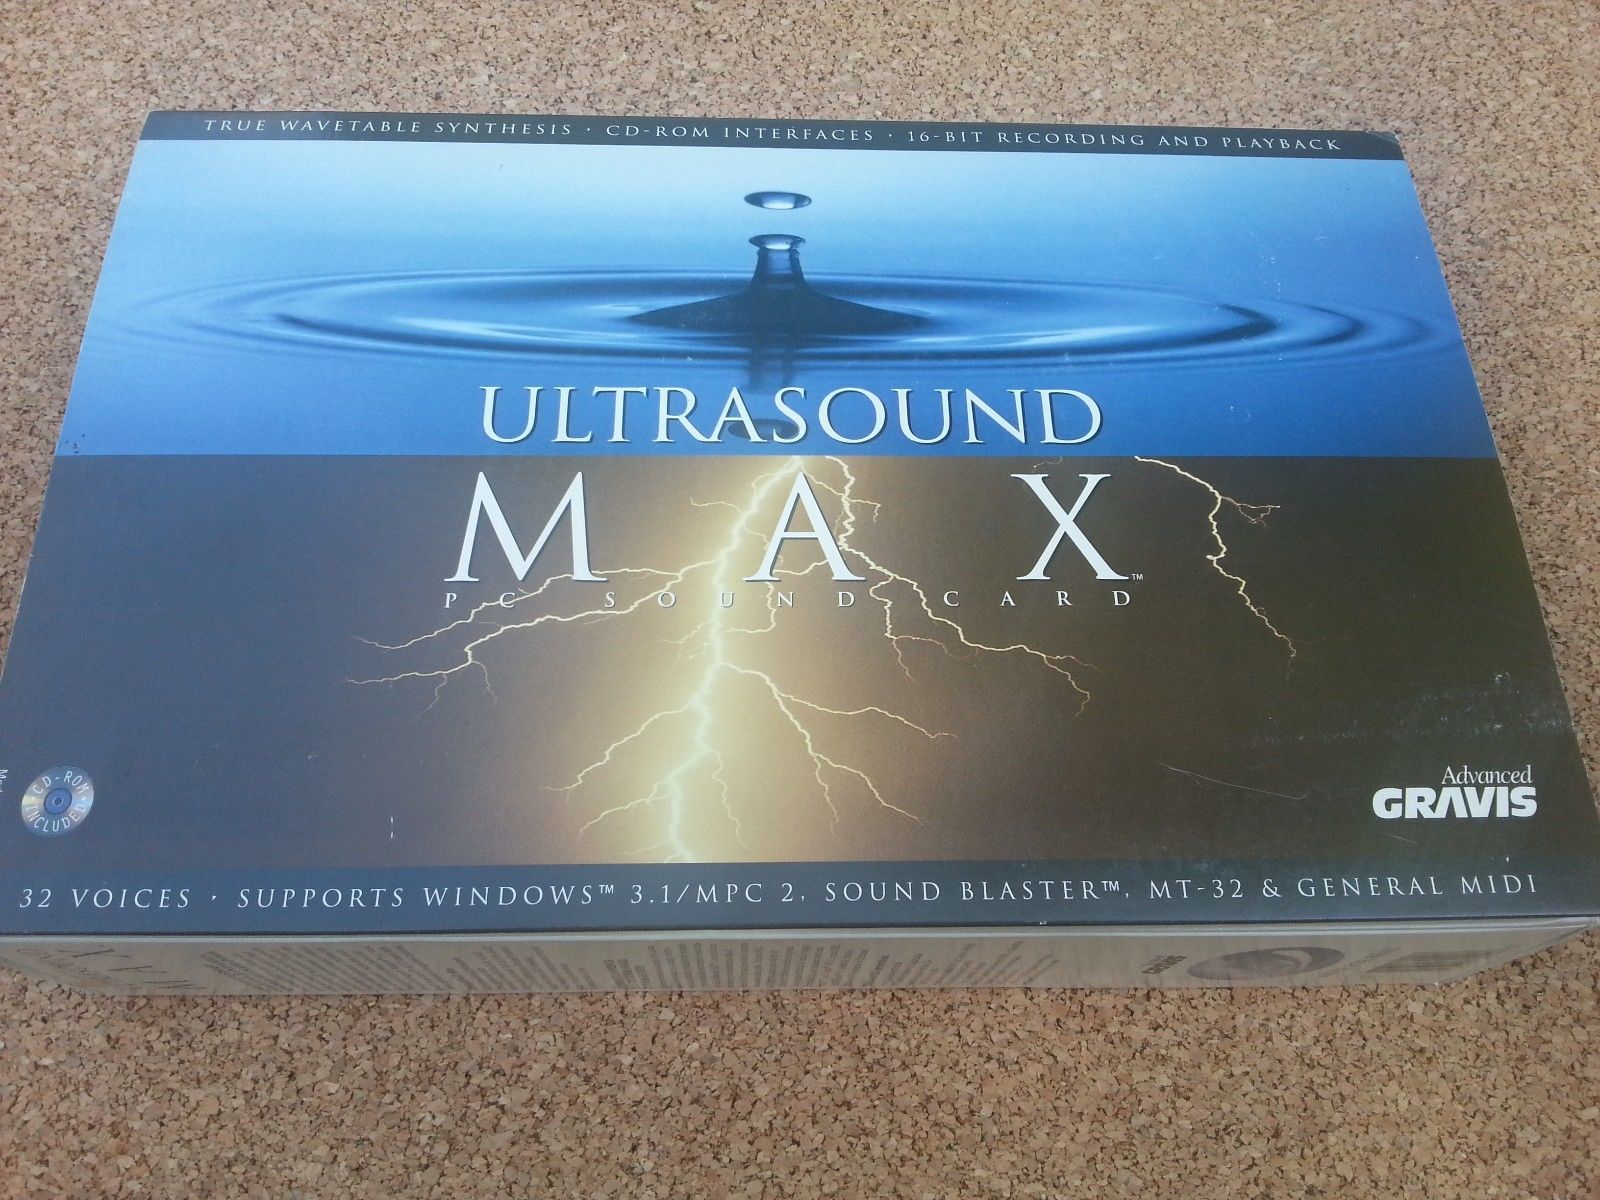 Ultrasound MAX box